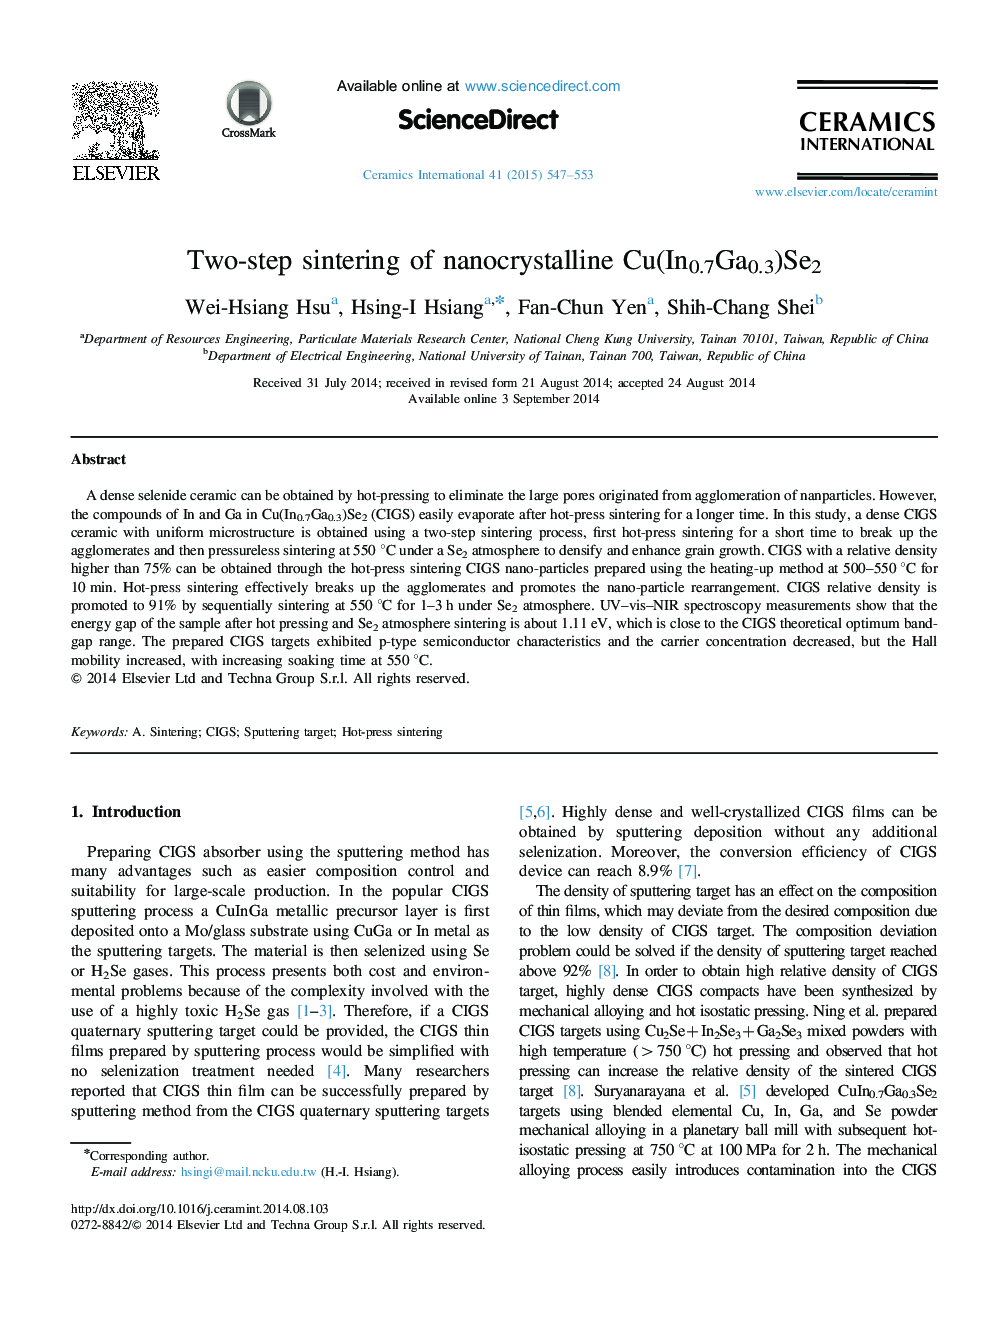 Two-step sintering of nanocrystalline Cu(In0.7Ga0.3)Se2